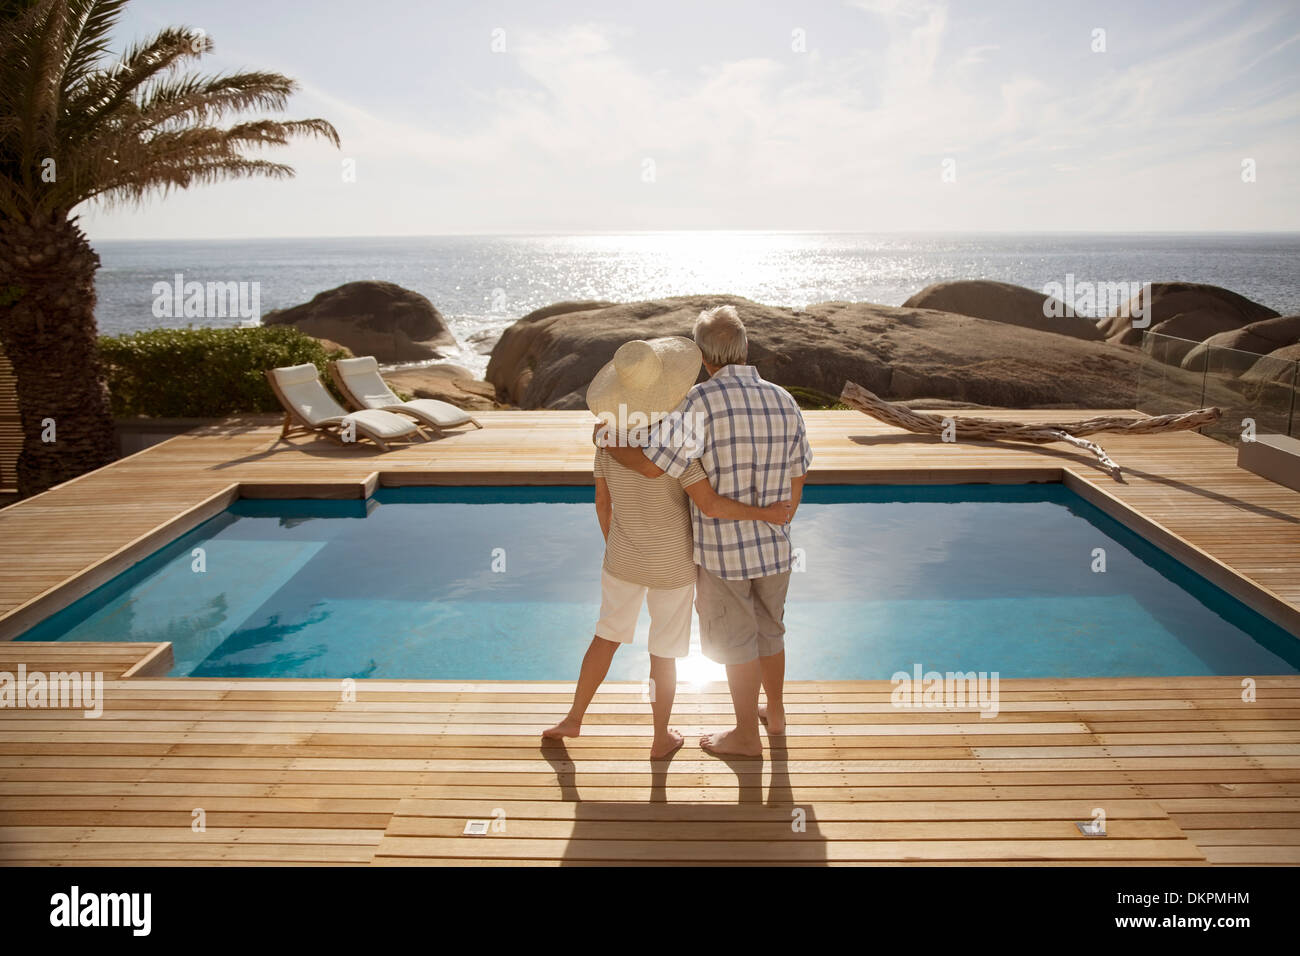 Älteres paar umarmt von modernen pool mit Blick auf Meer Stockfoto